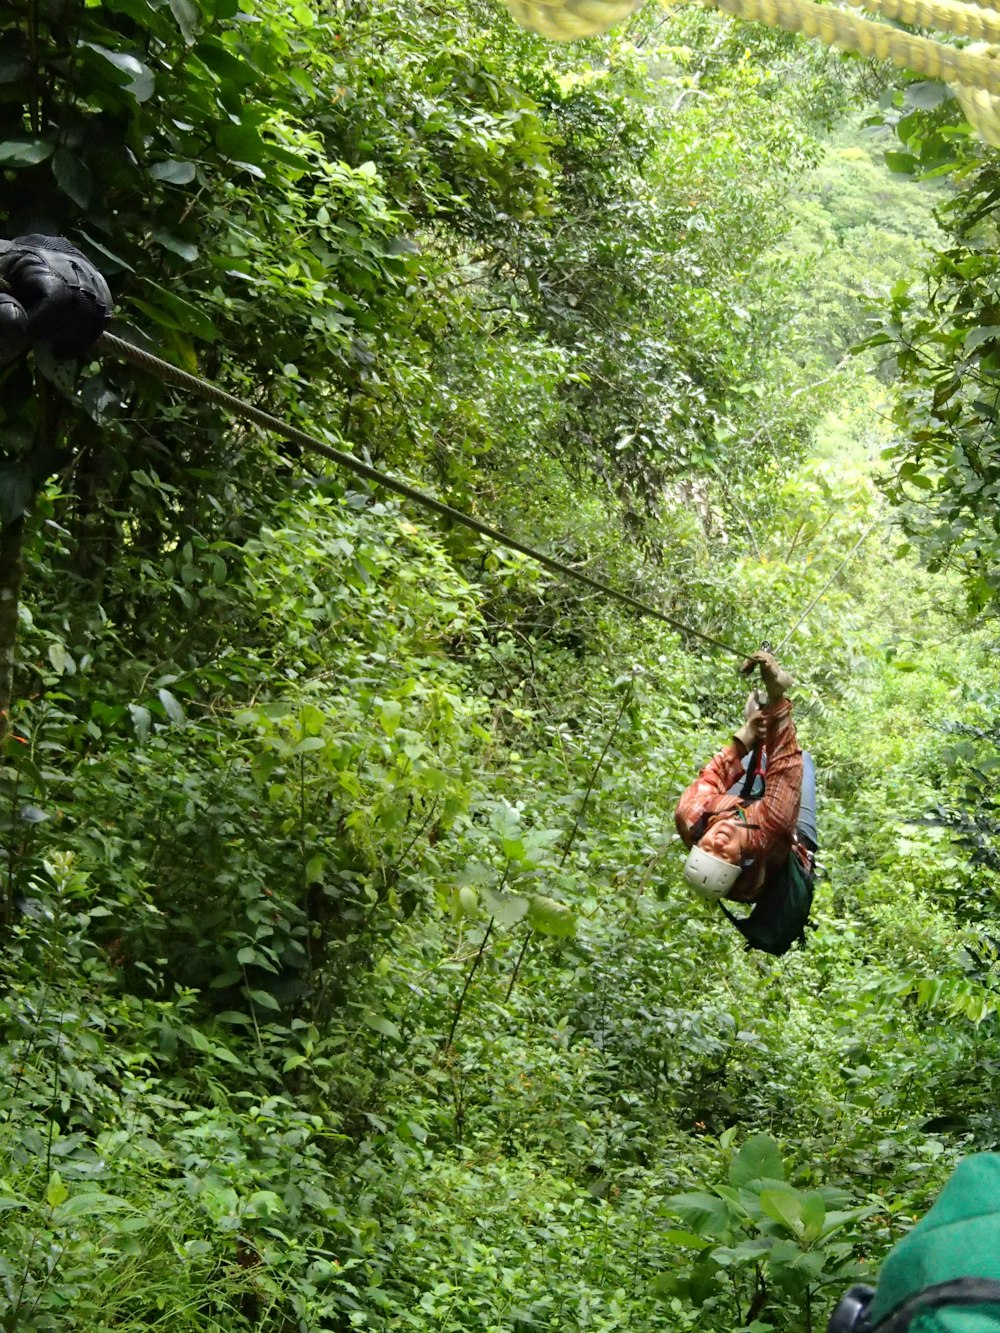 a man riding a zip line through a lush green forest